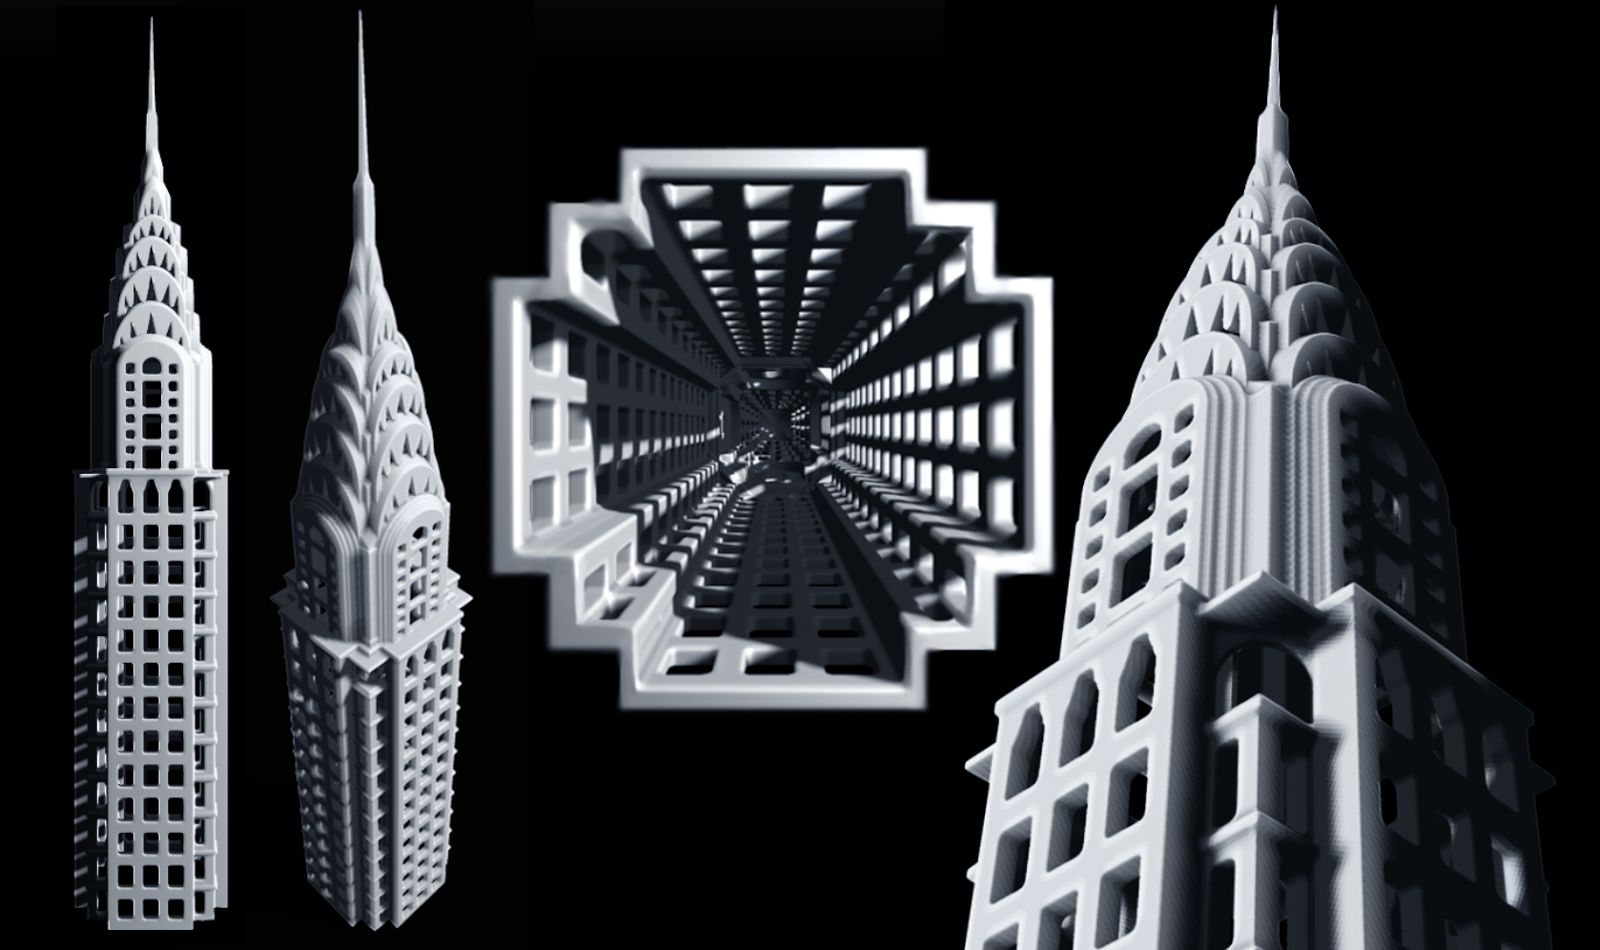 Chrysler building gargoyles made #5